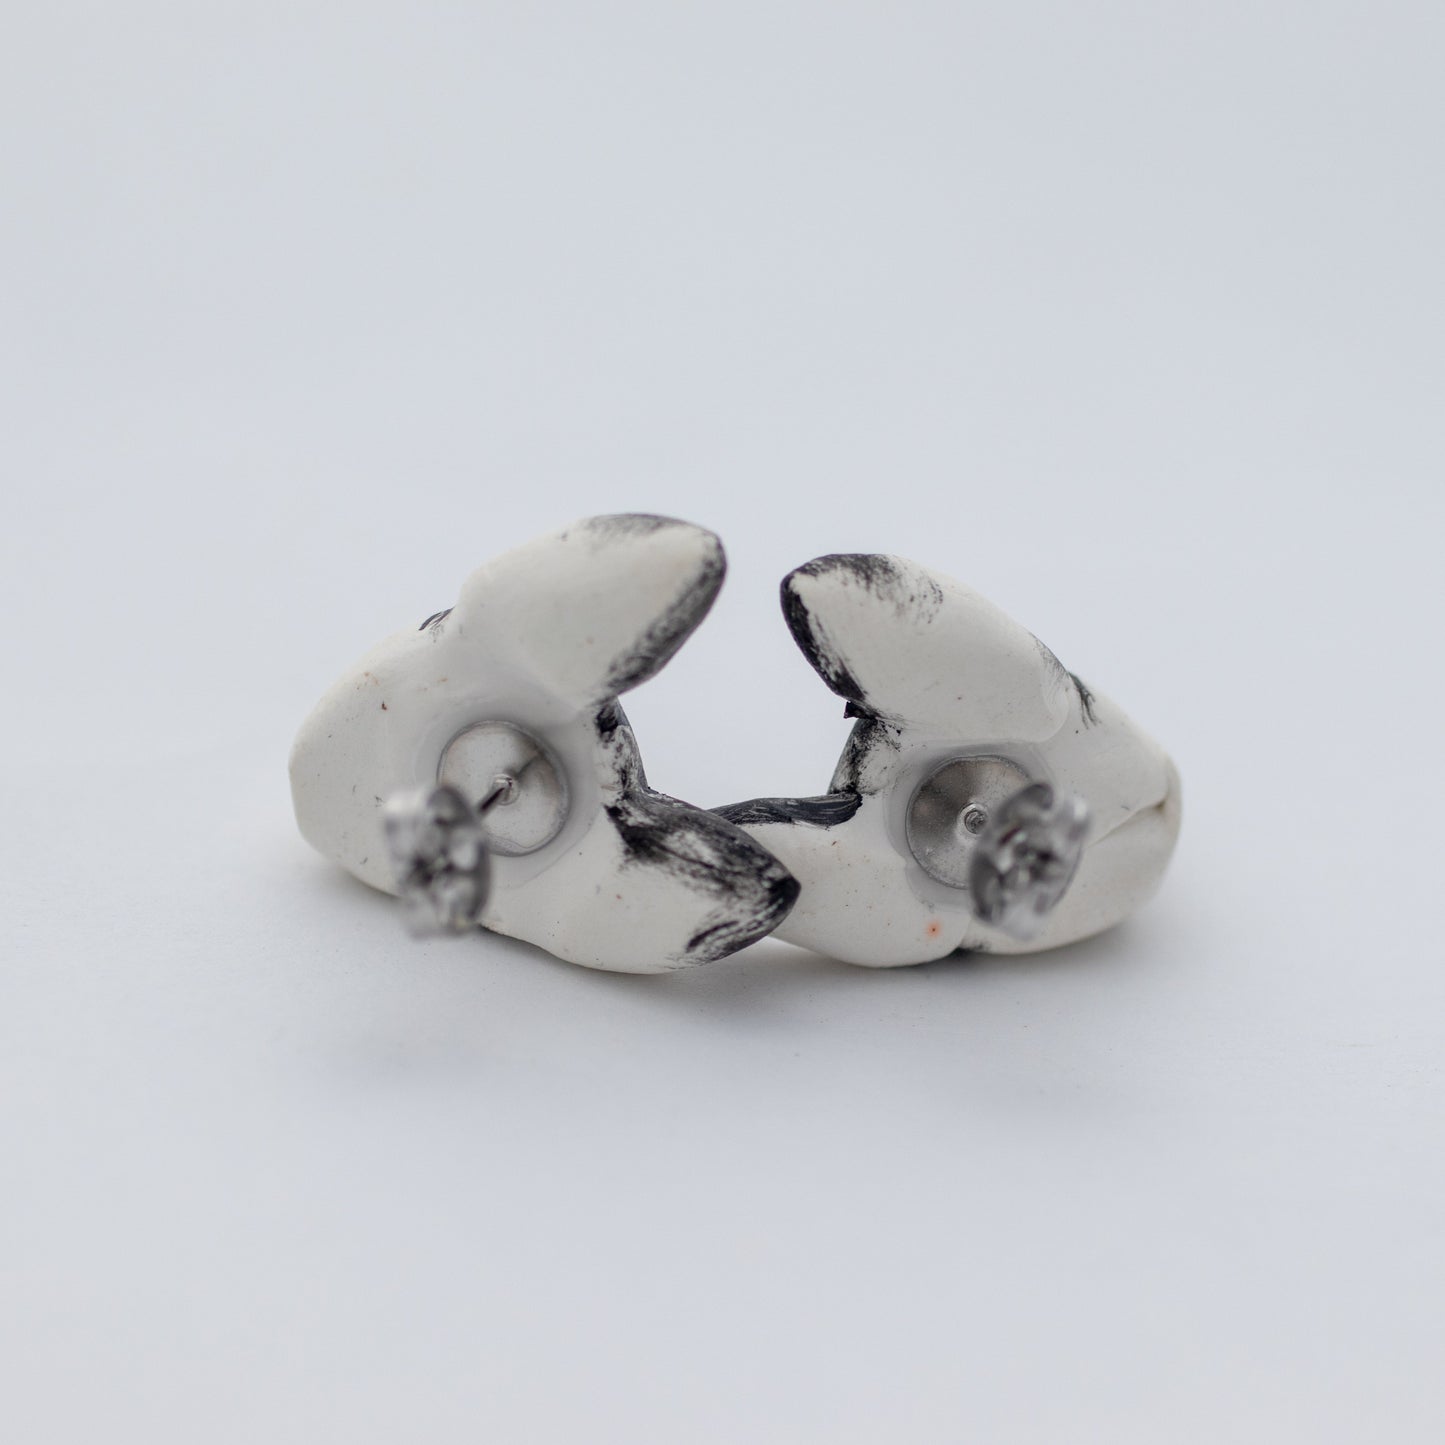 Handmade polymer clay husky stud earrings showing surgical steel backs